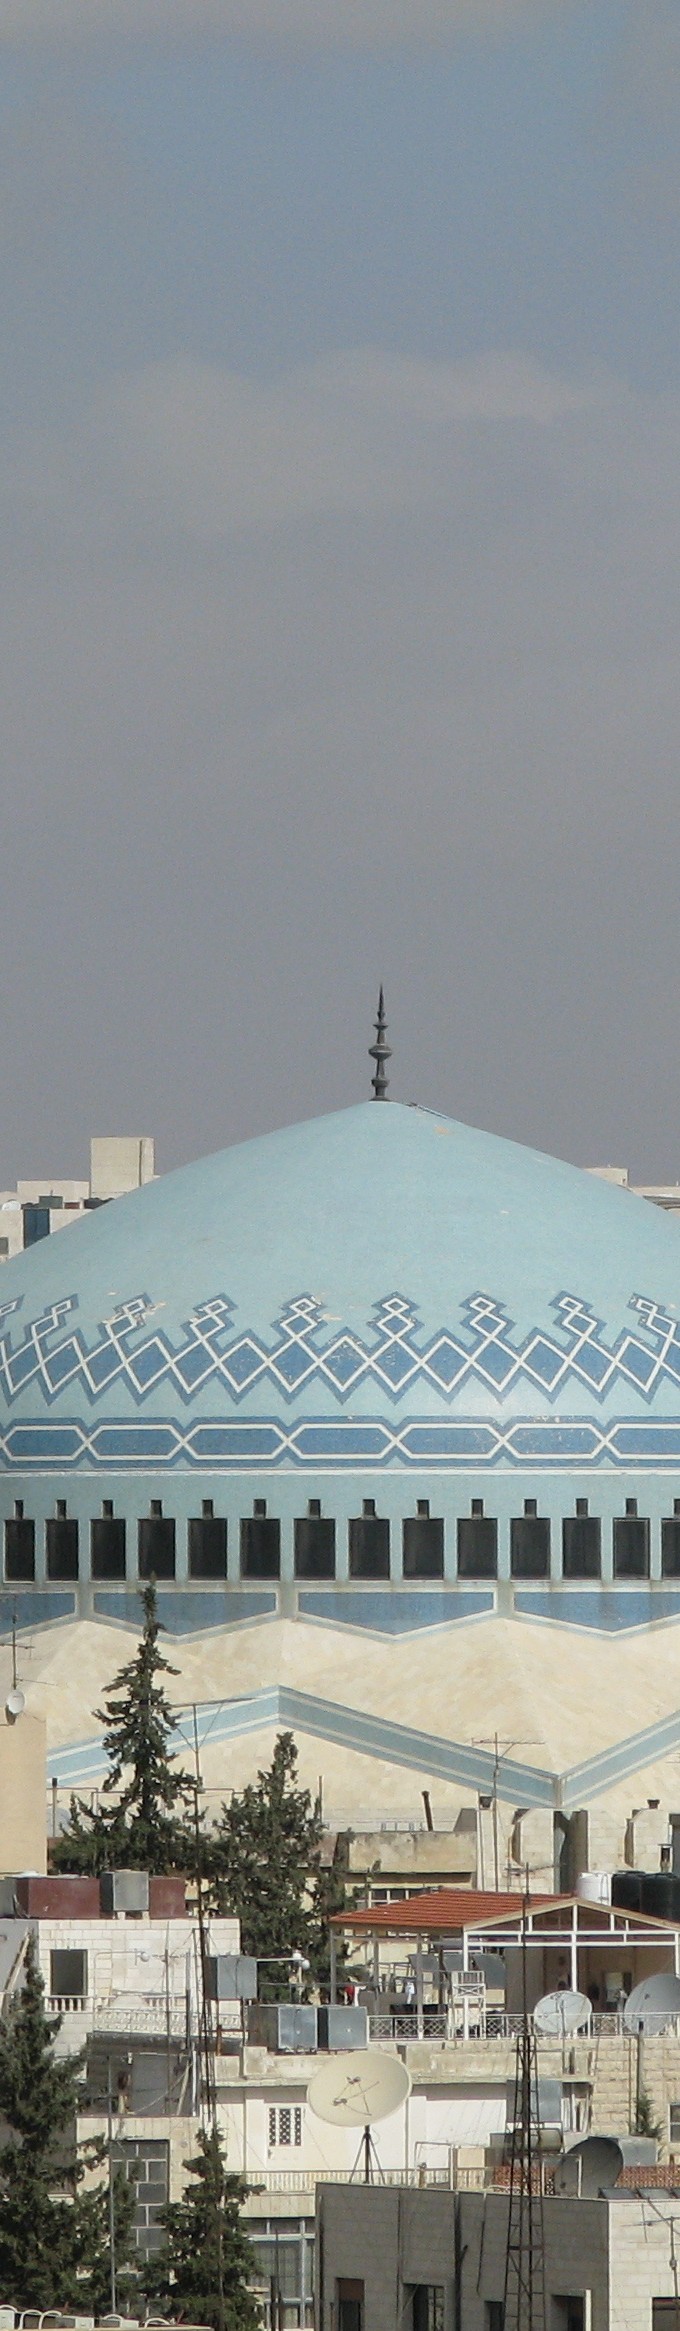 Amman - Jordan , City and Blue Mosque